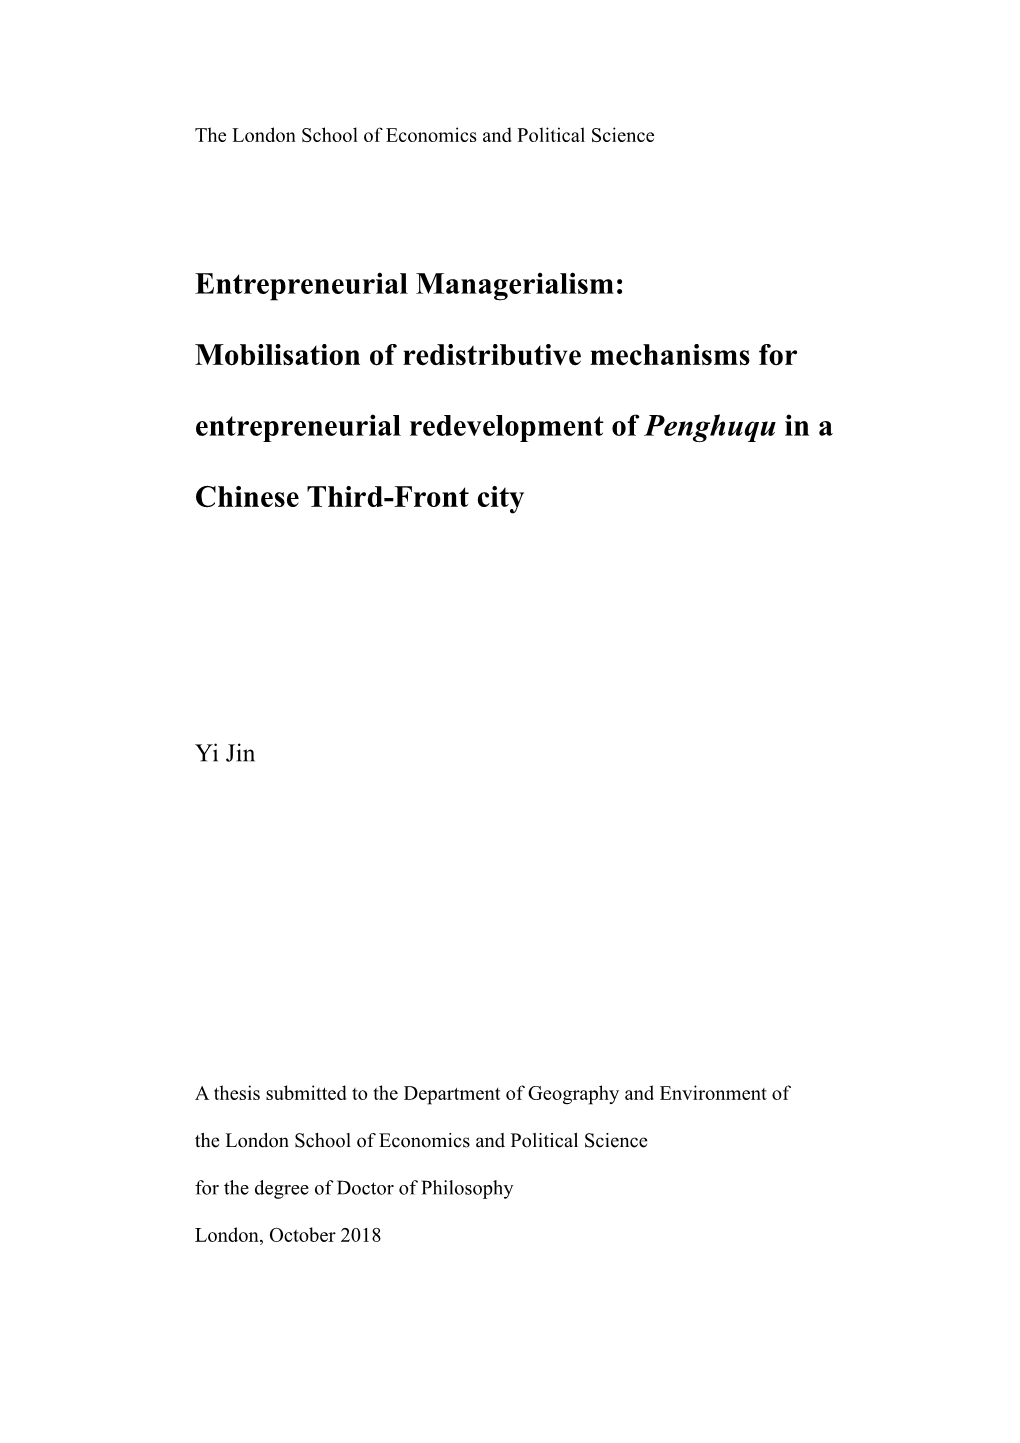 Entrepreneurial Managerialism